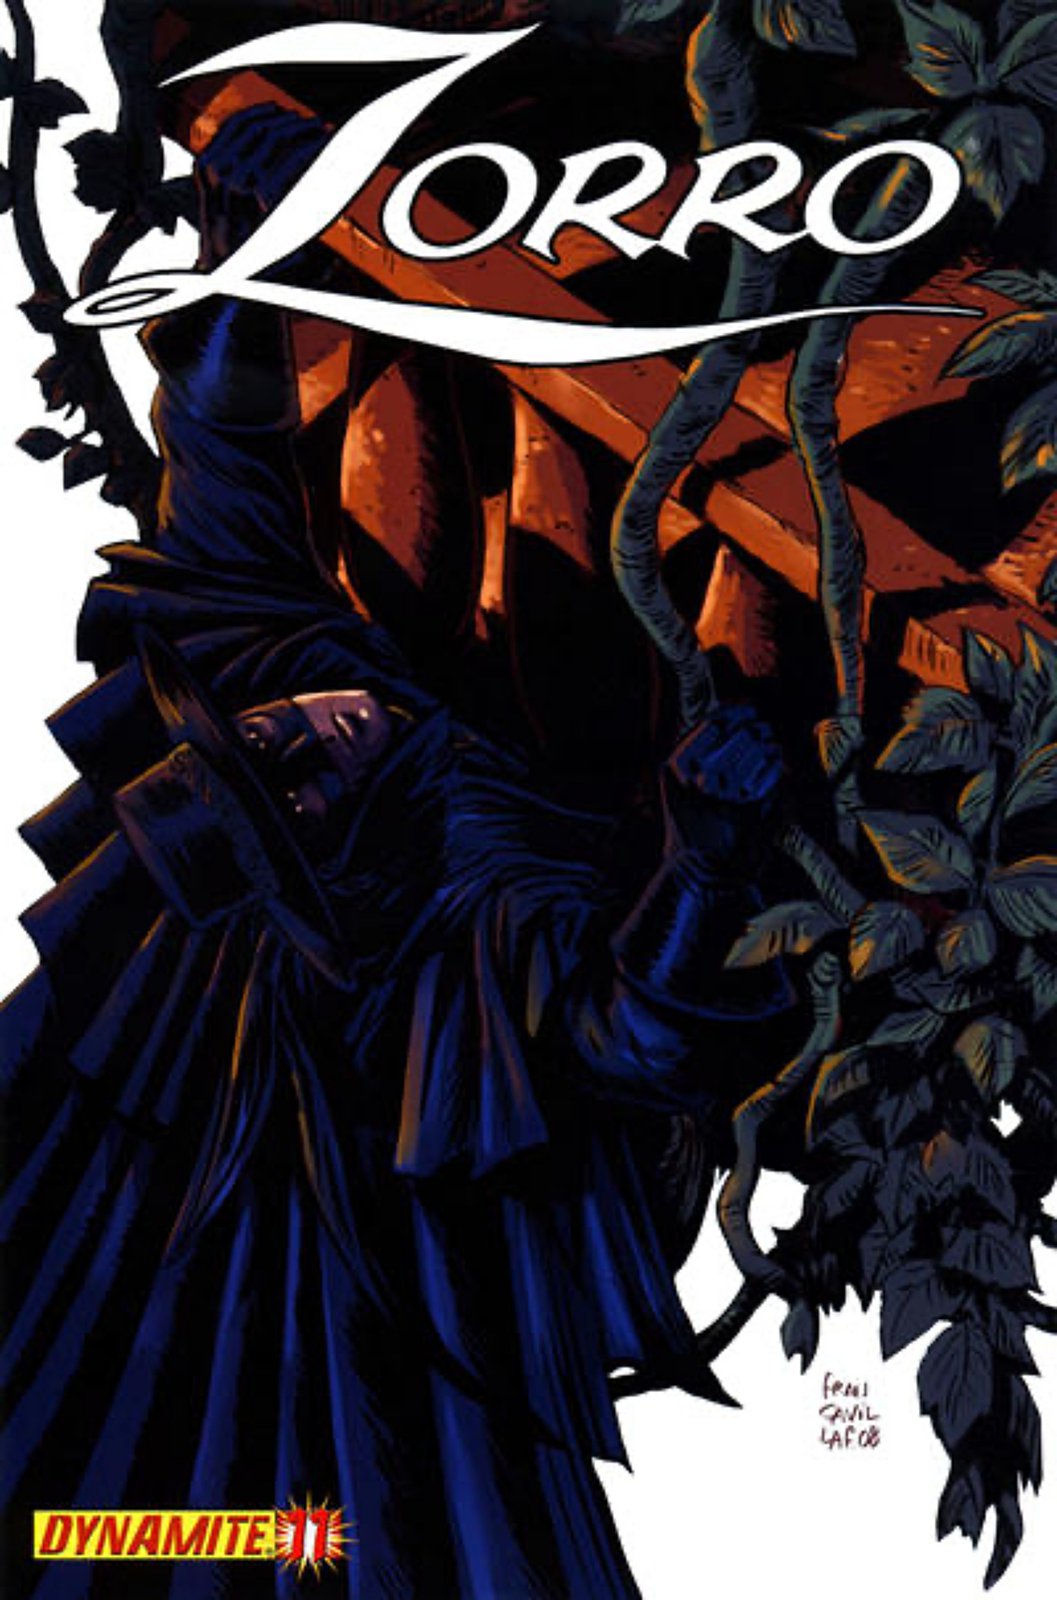 Zorro #11 Francesco Francavilla Cover (2008-2010) Dynamite Comics